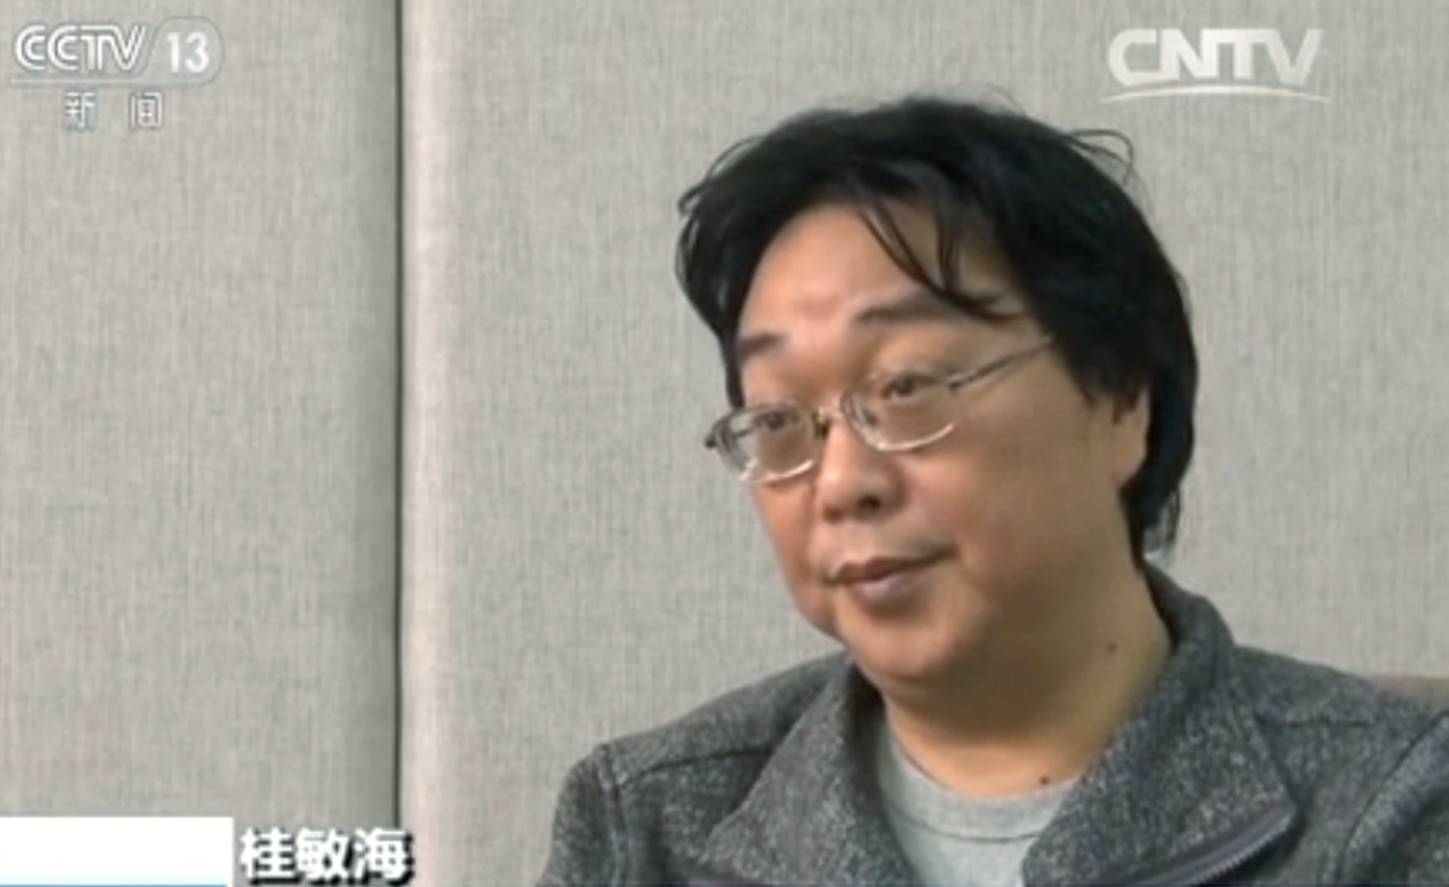 Gui Minhai in an undated screen grab from CCTV. Photo: Handout